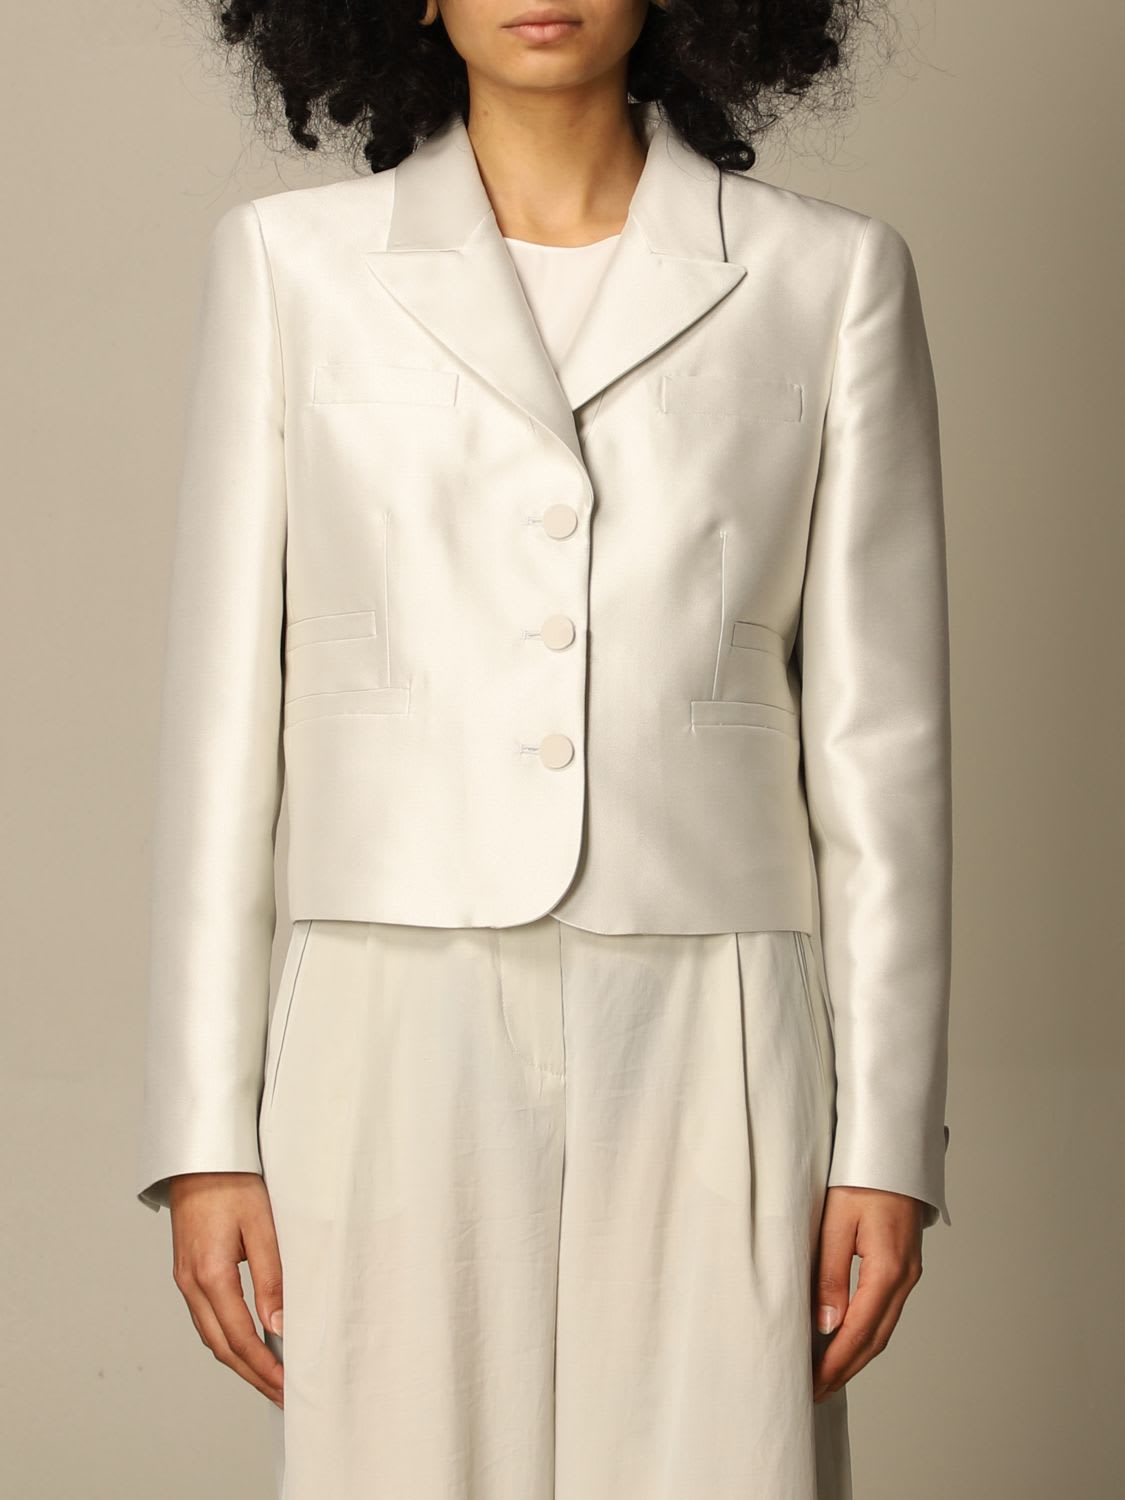 Photo of  Giorgio Armani Blazer Blazer Women Giorgio Armani- shop Giorgio Armani jackets online sales